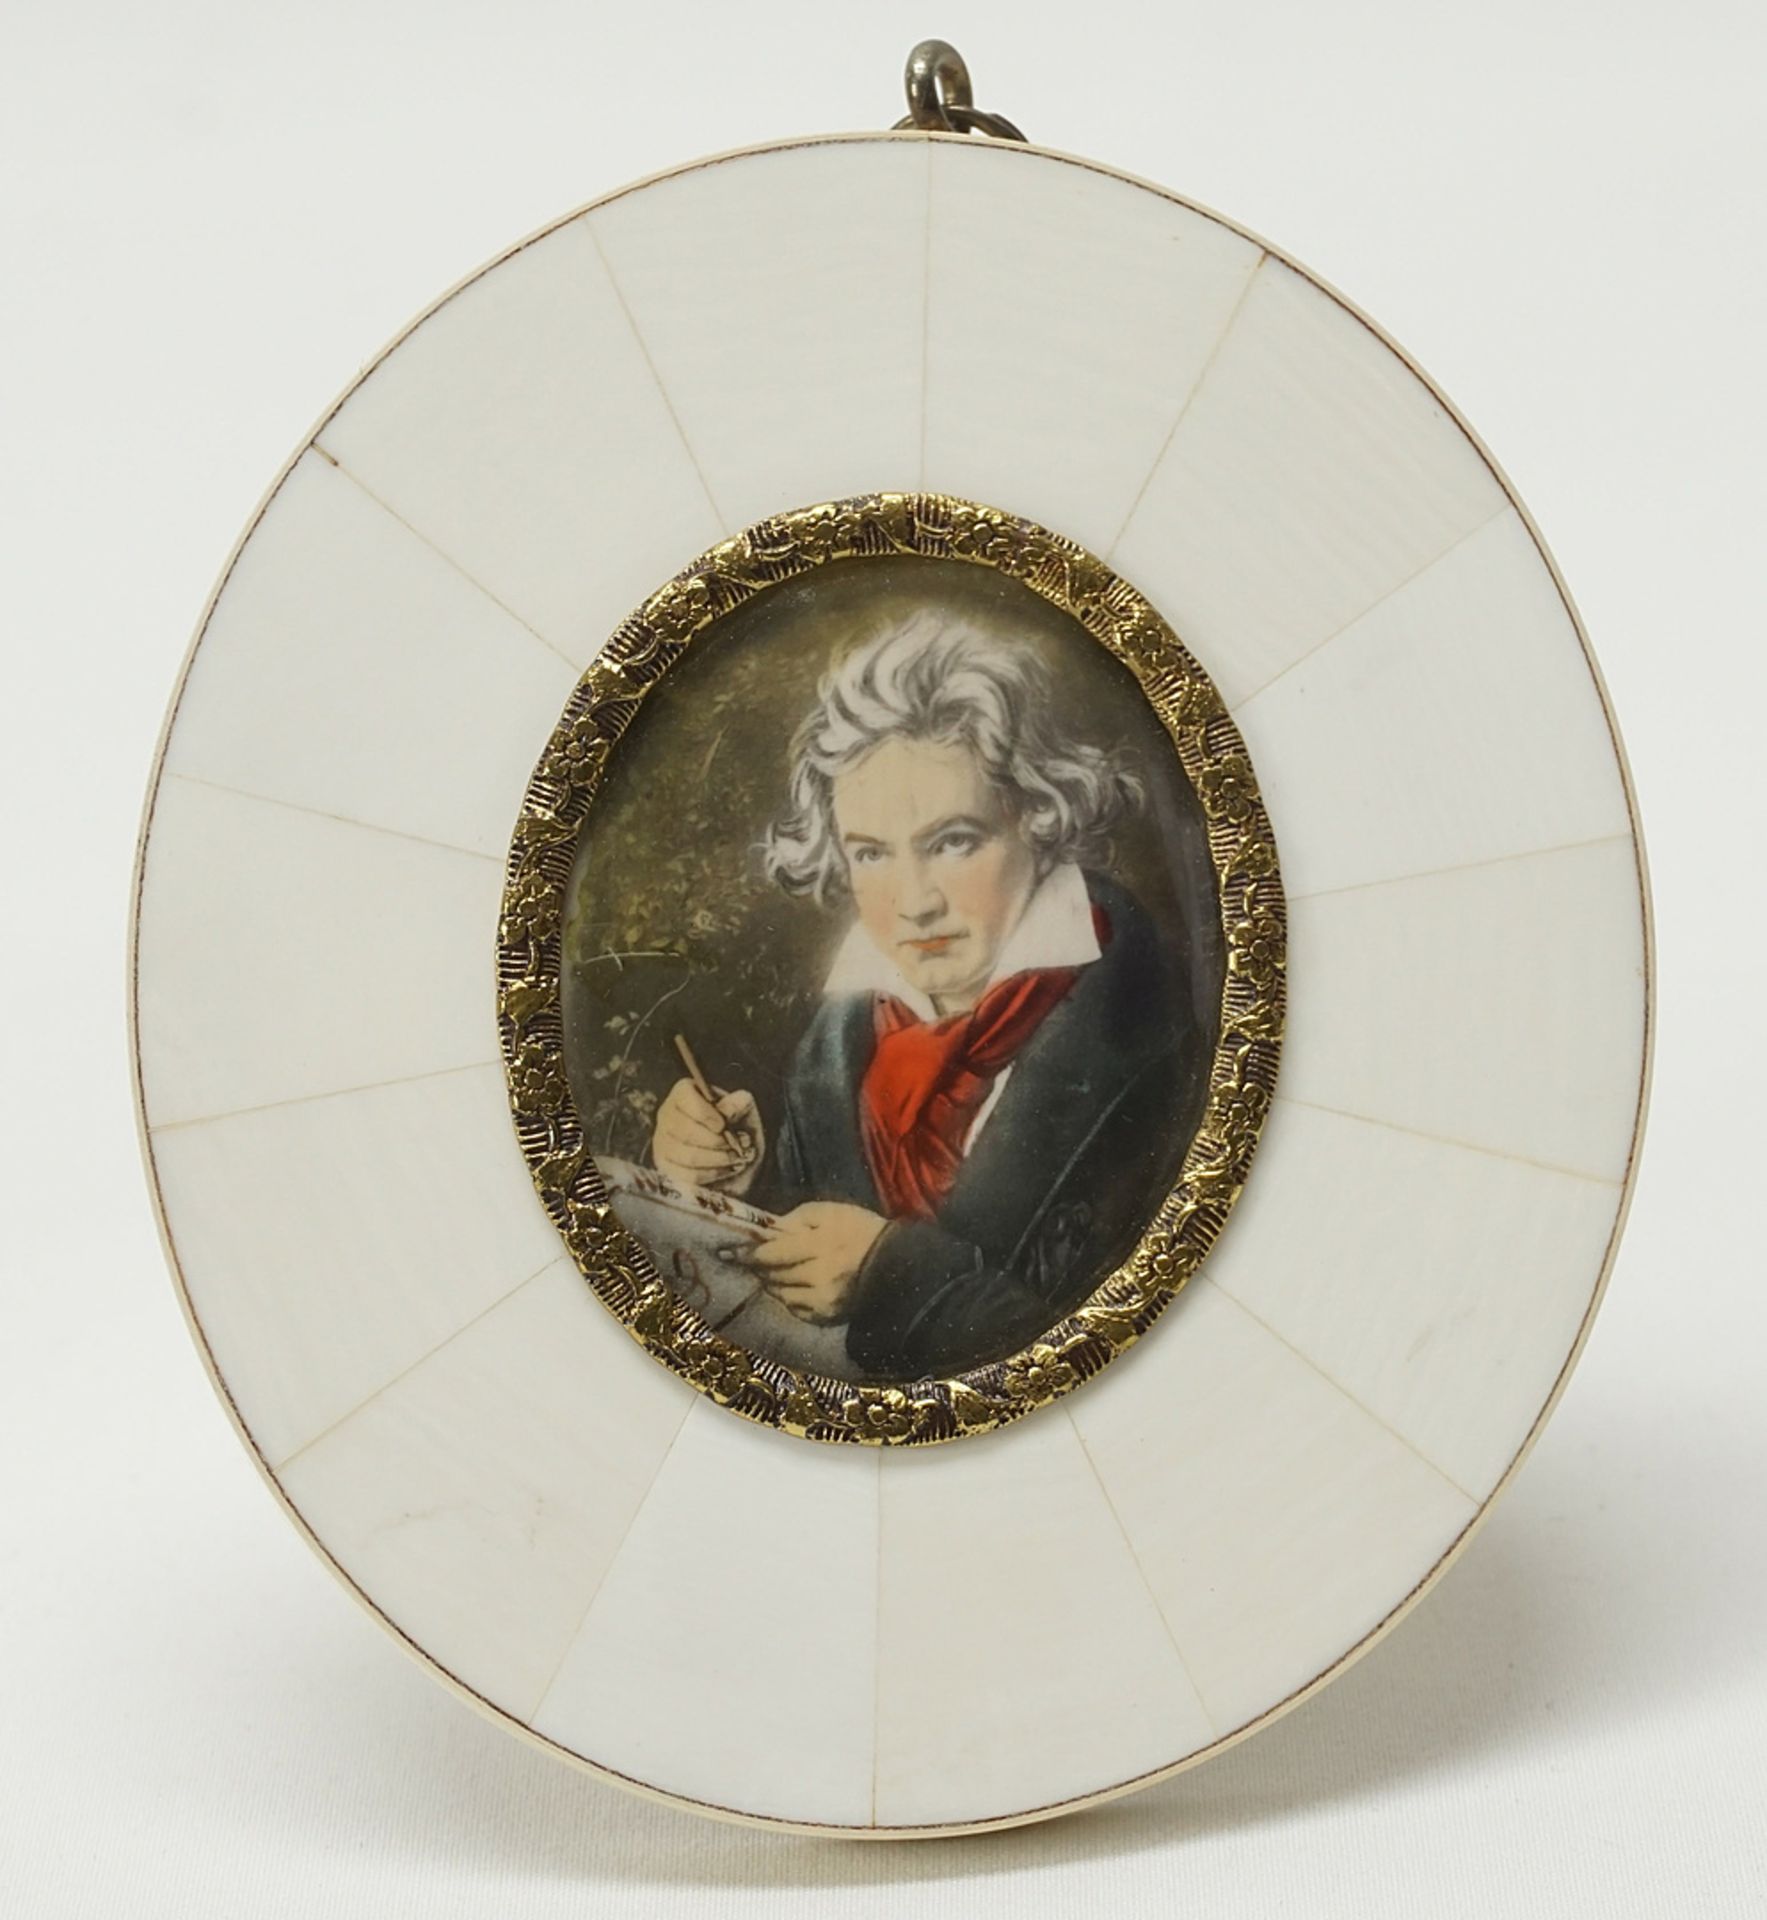 Miniature portrait of Ludwig van Beethoven